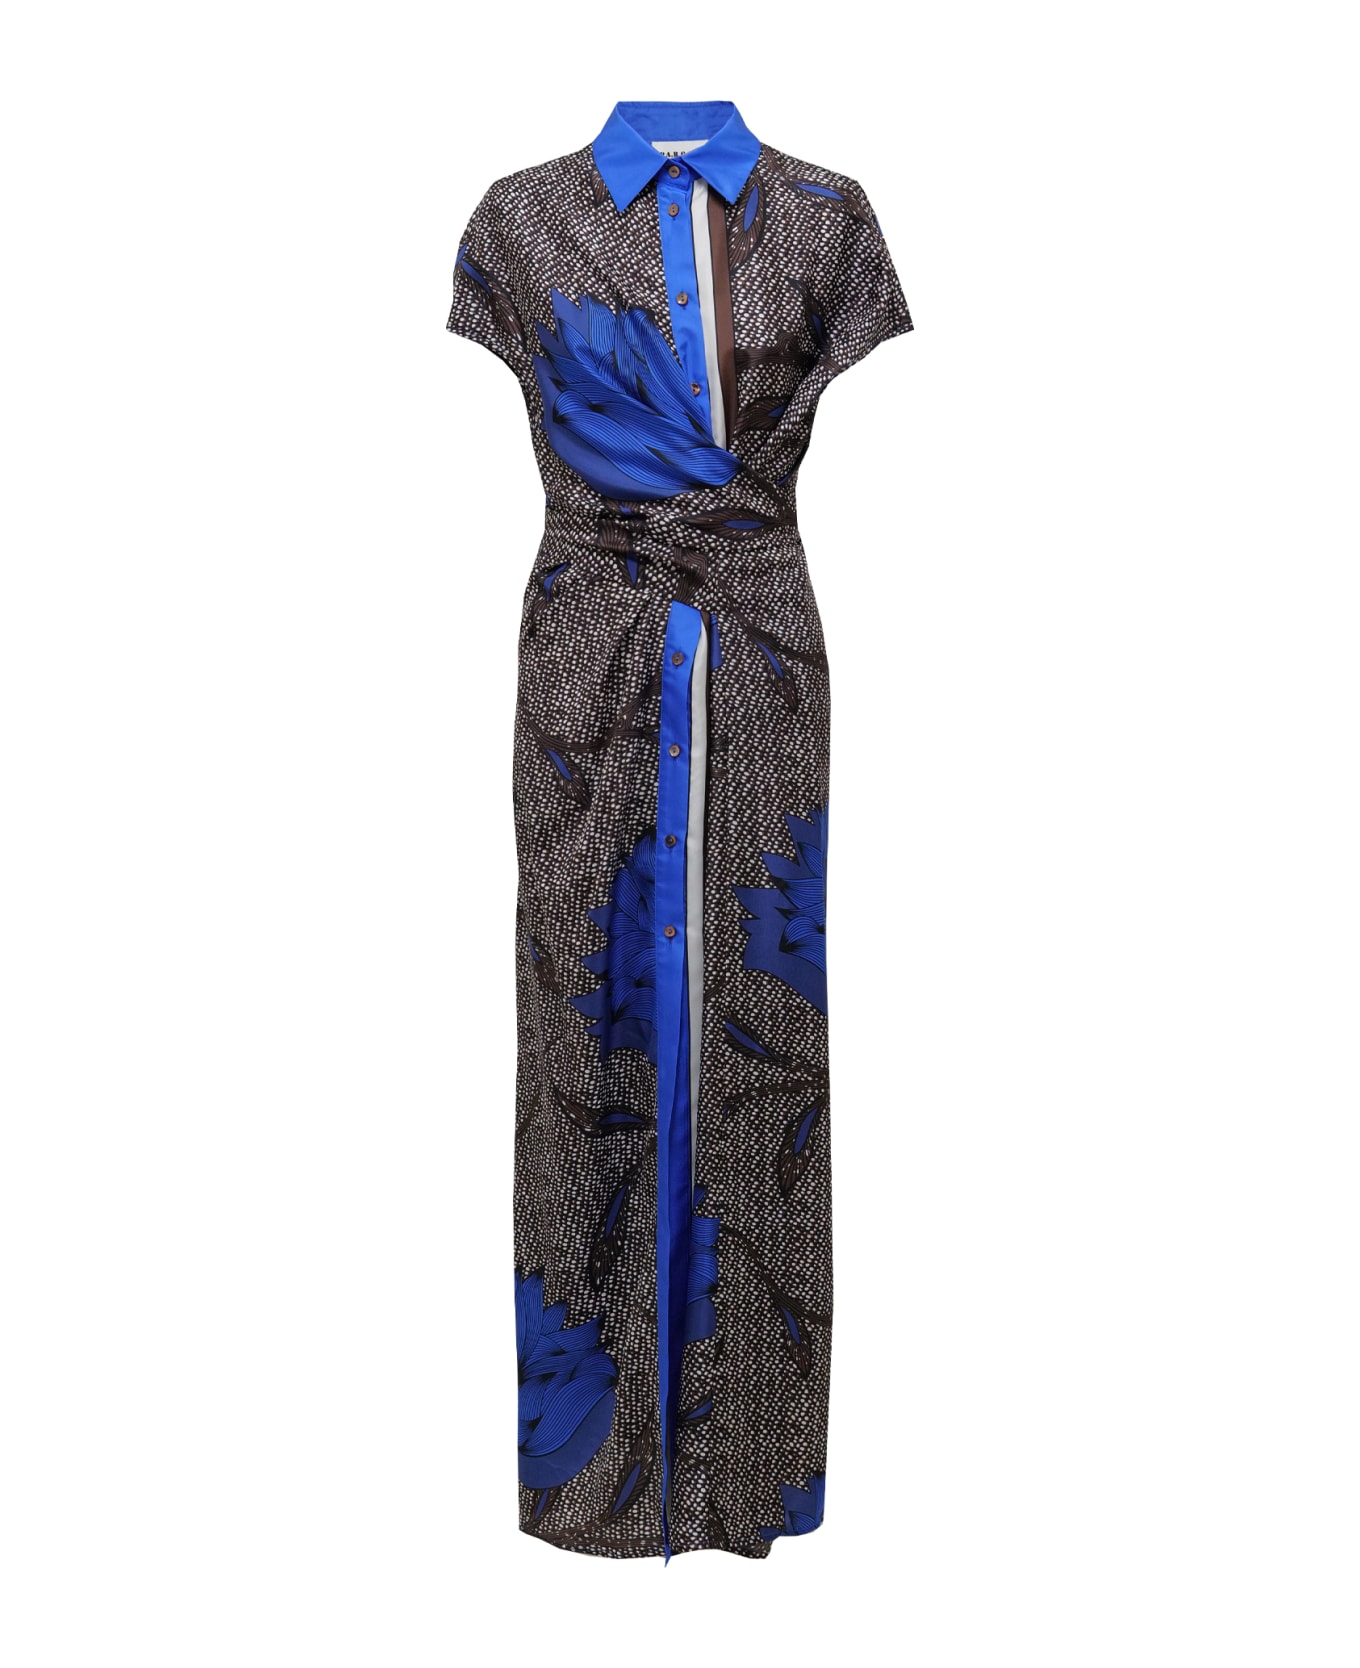 Parosh Dress - MultiColour ジャンプスーツ